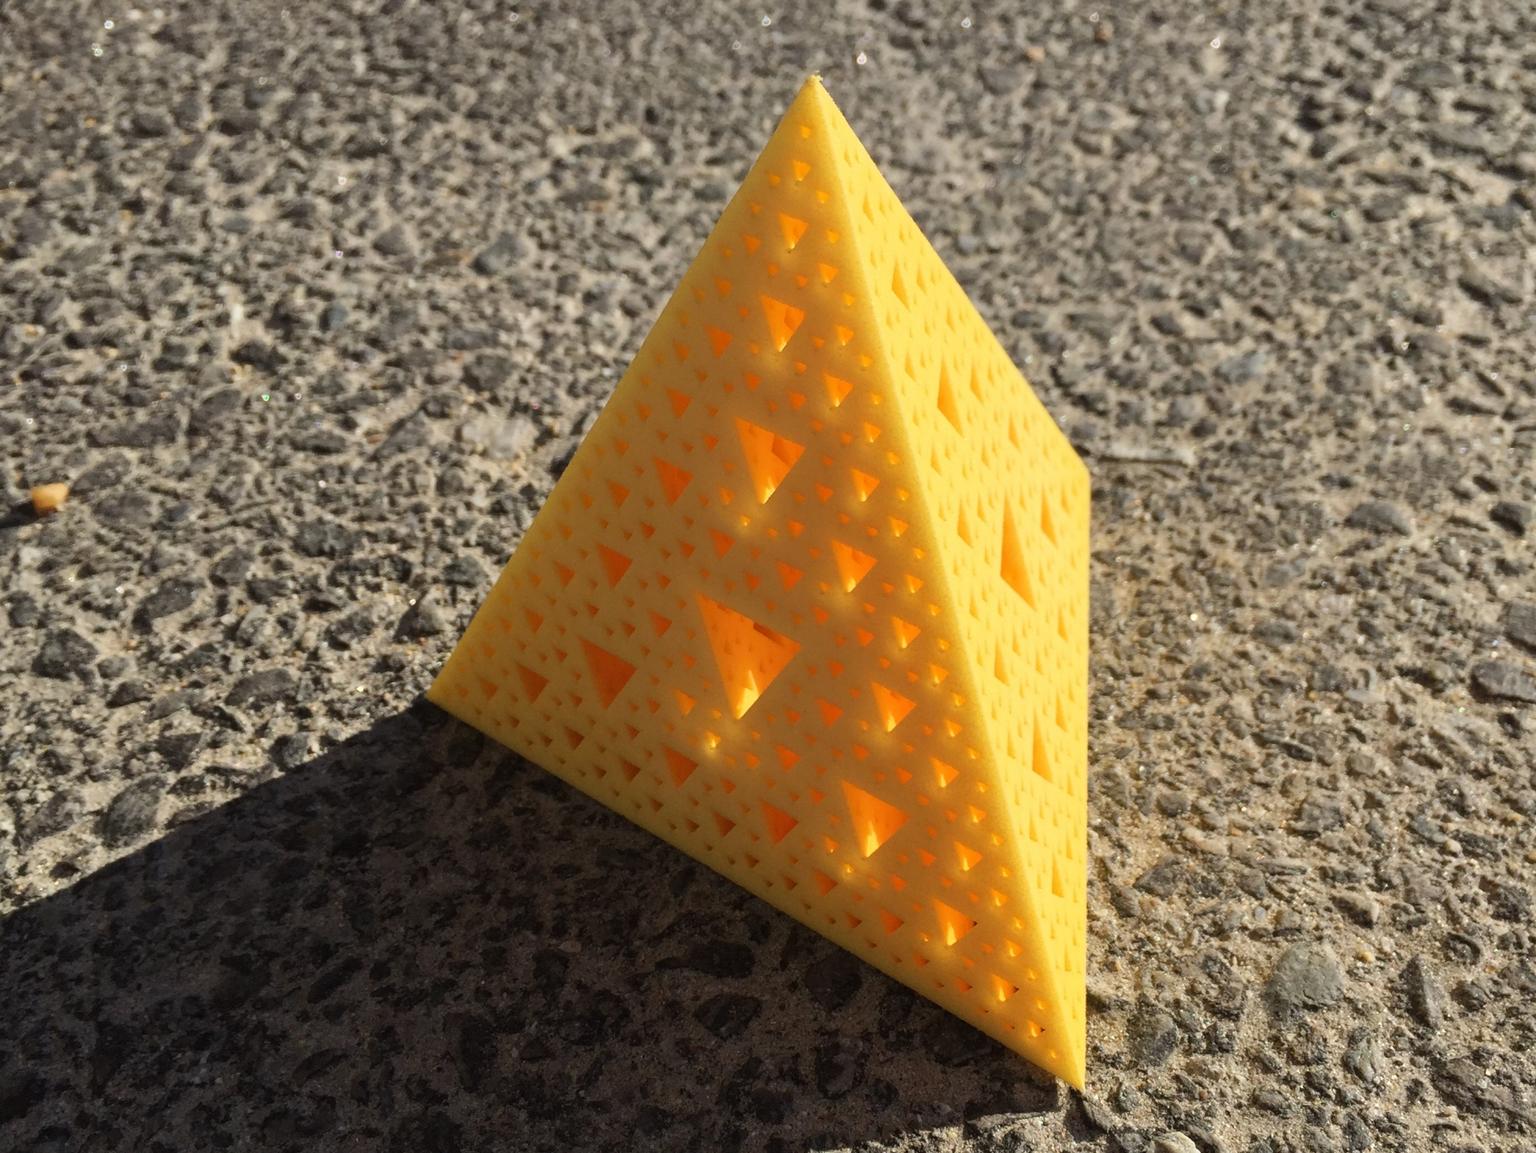 Image for entry 'Golden Sierpinski Tetrahedron'